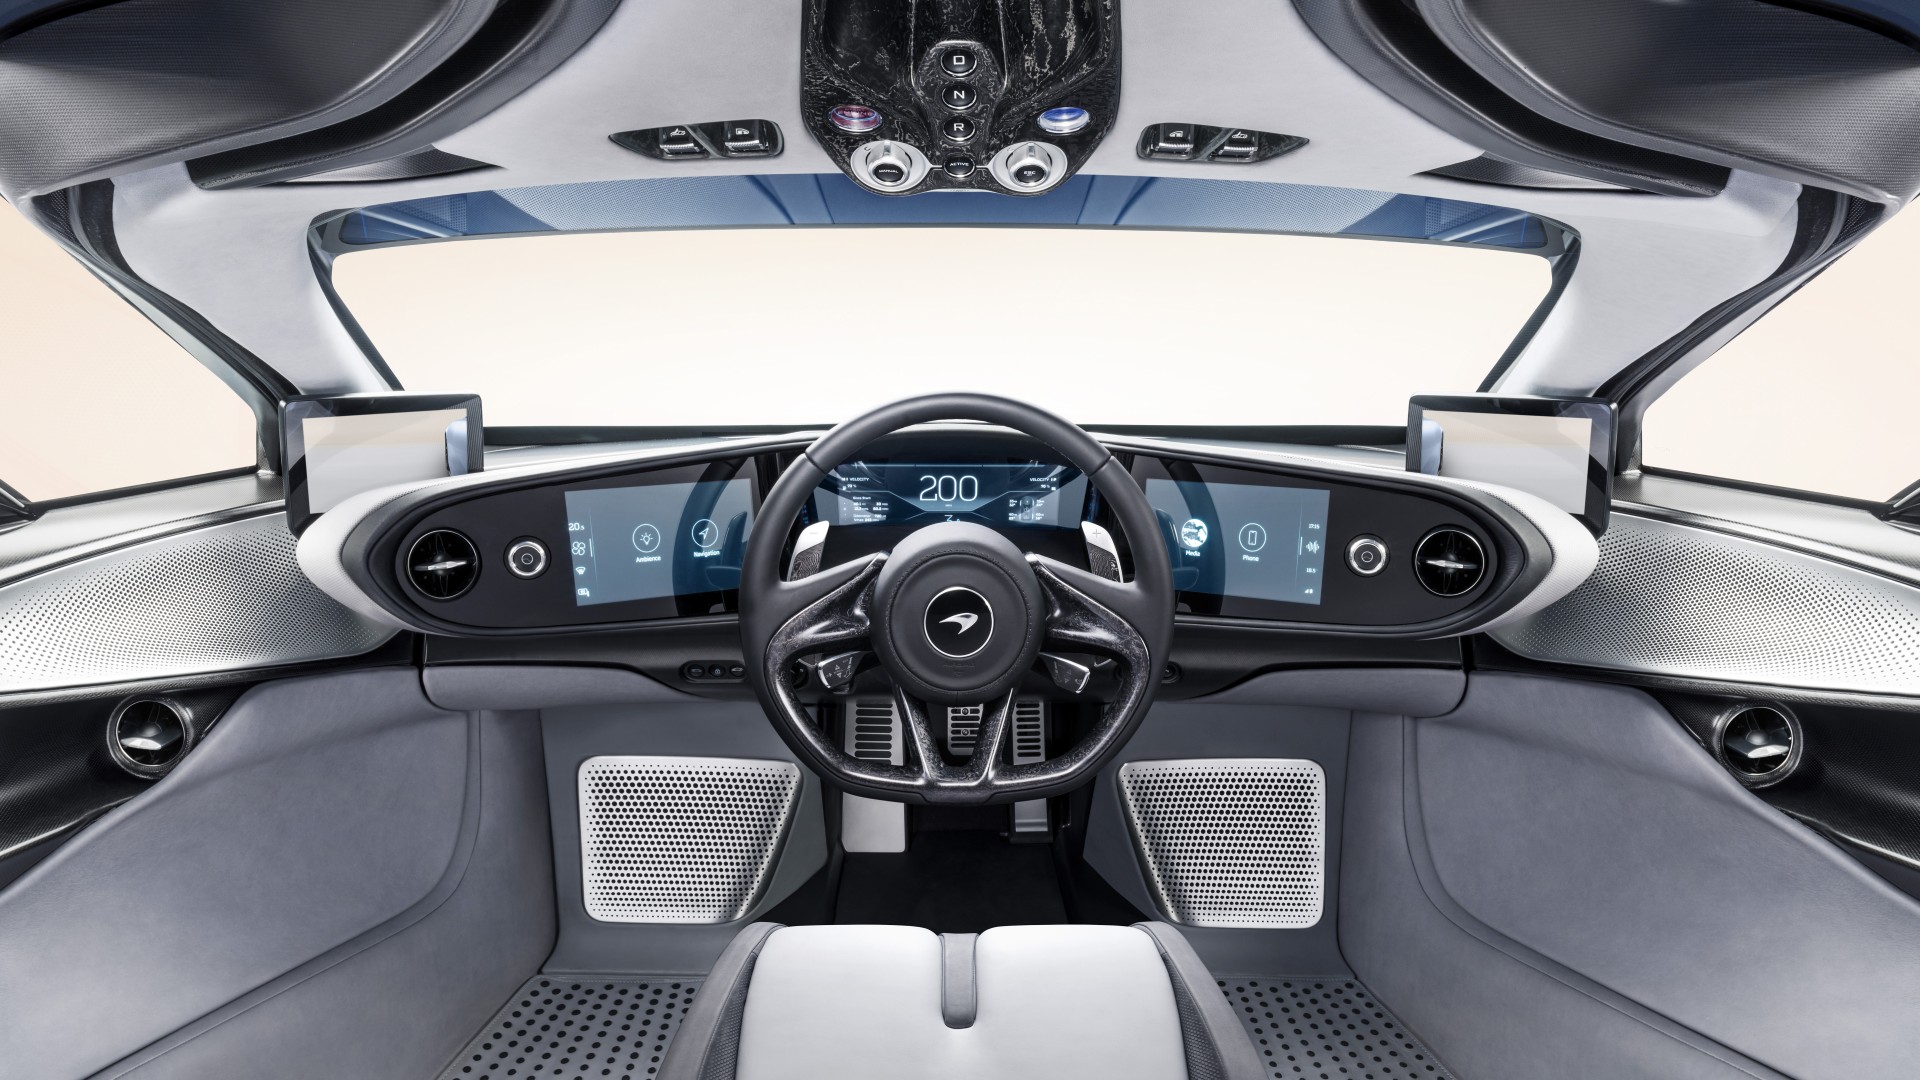 2019 McLaren Speedtail Interior 4K 8K Wallpaper HD Car